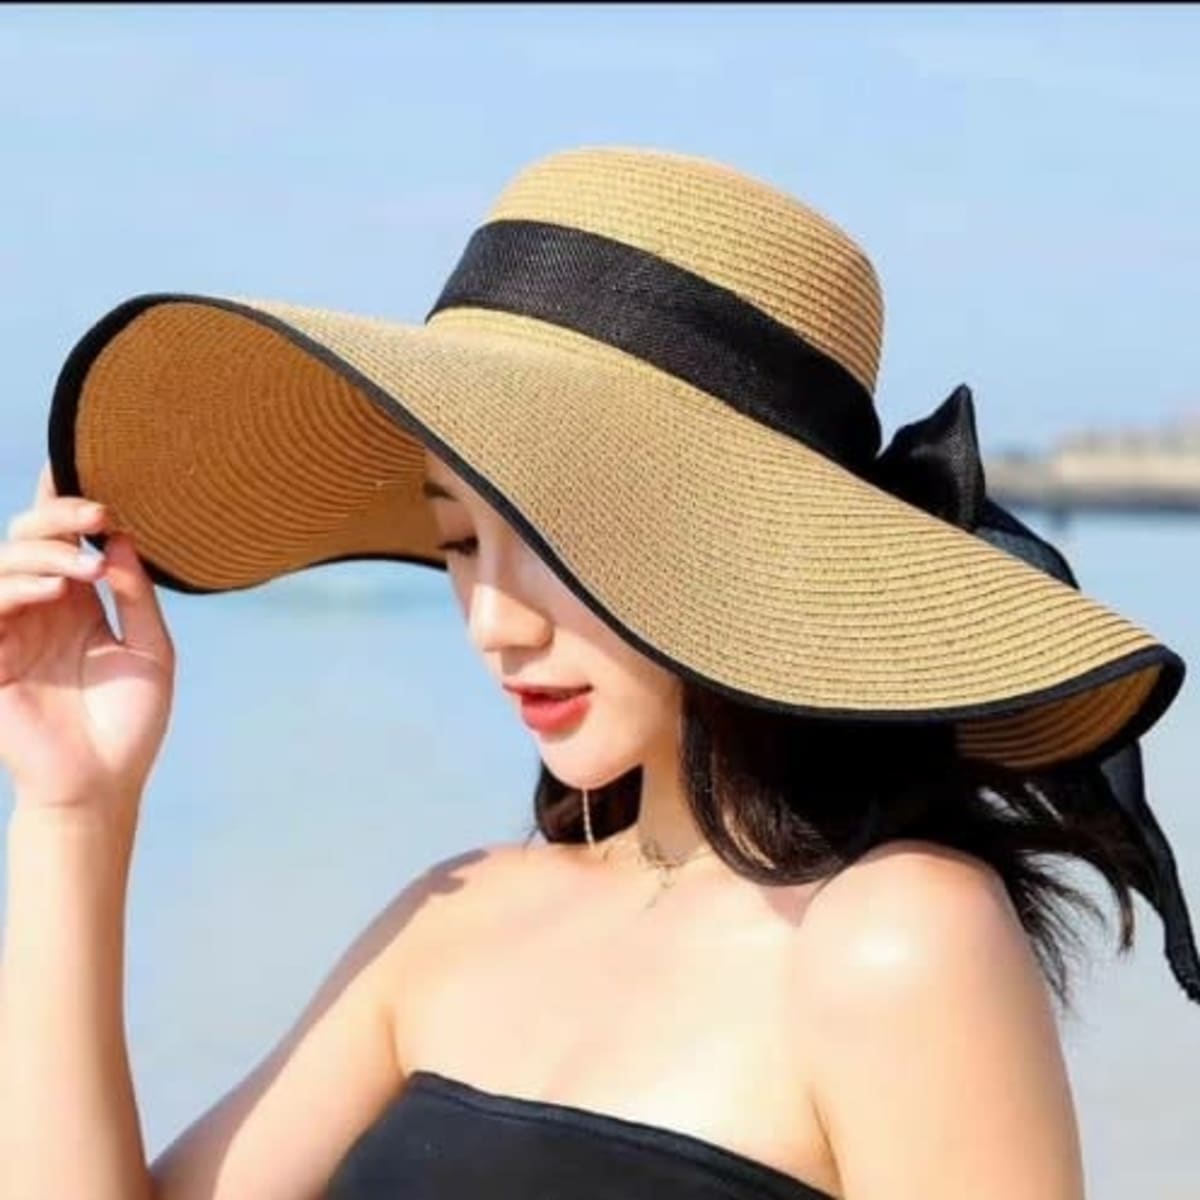 Women's Large Brim Straw Hat - Brown/black